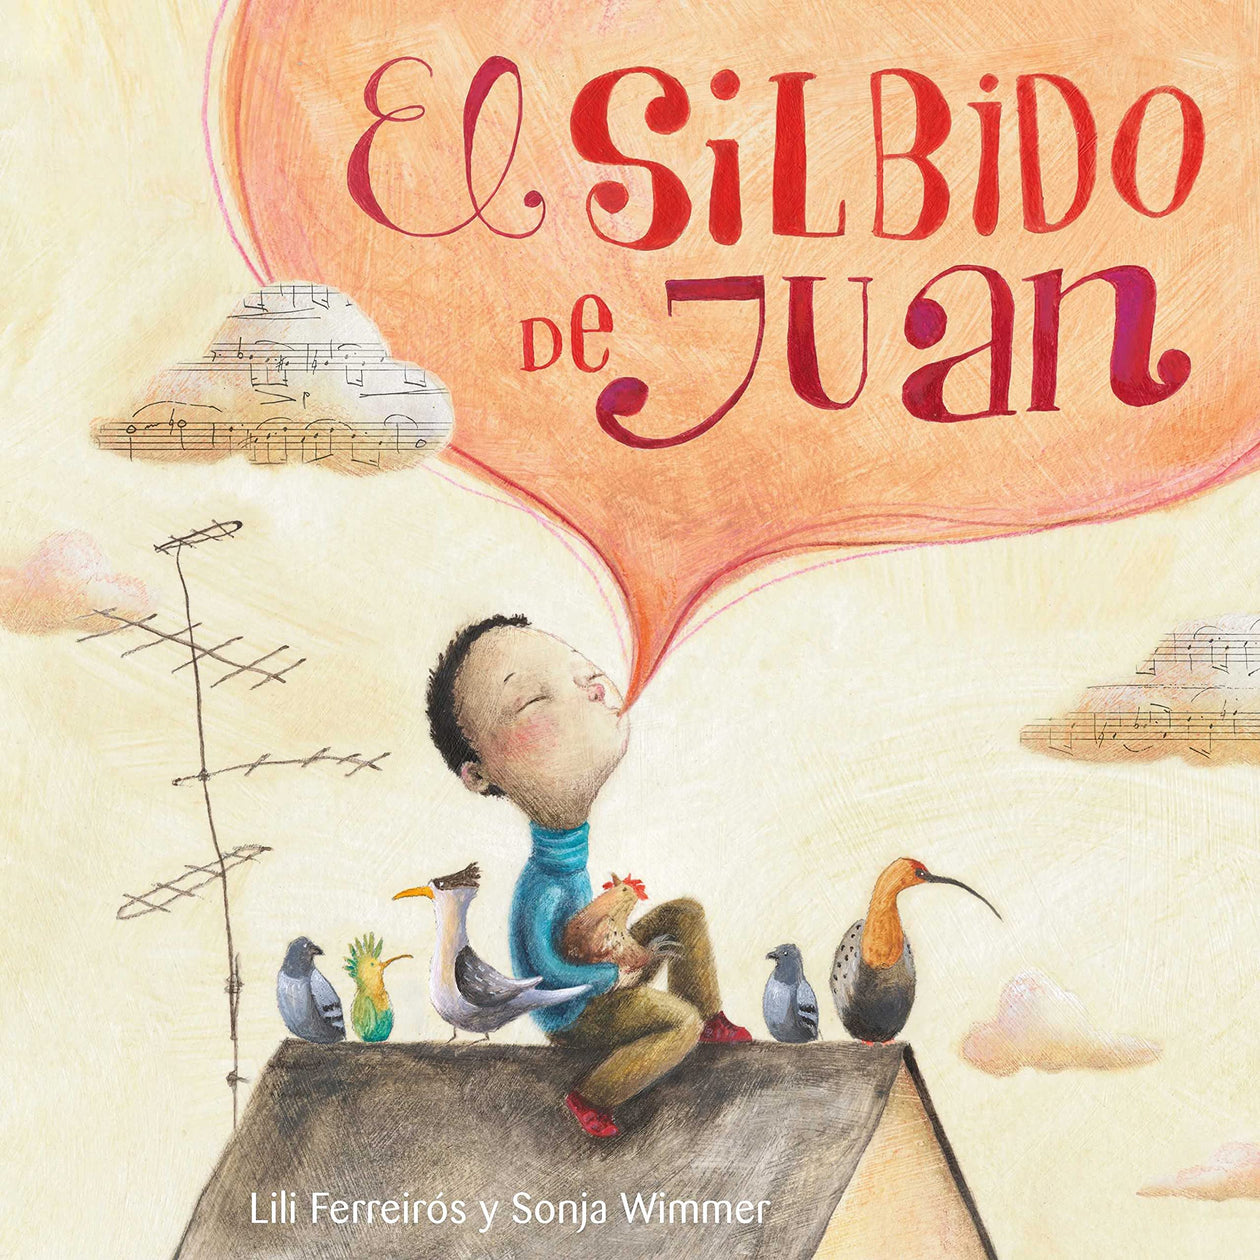 Lili Ferreiros: El silbido de Juan, illustrated by Sonja Wimmer